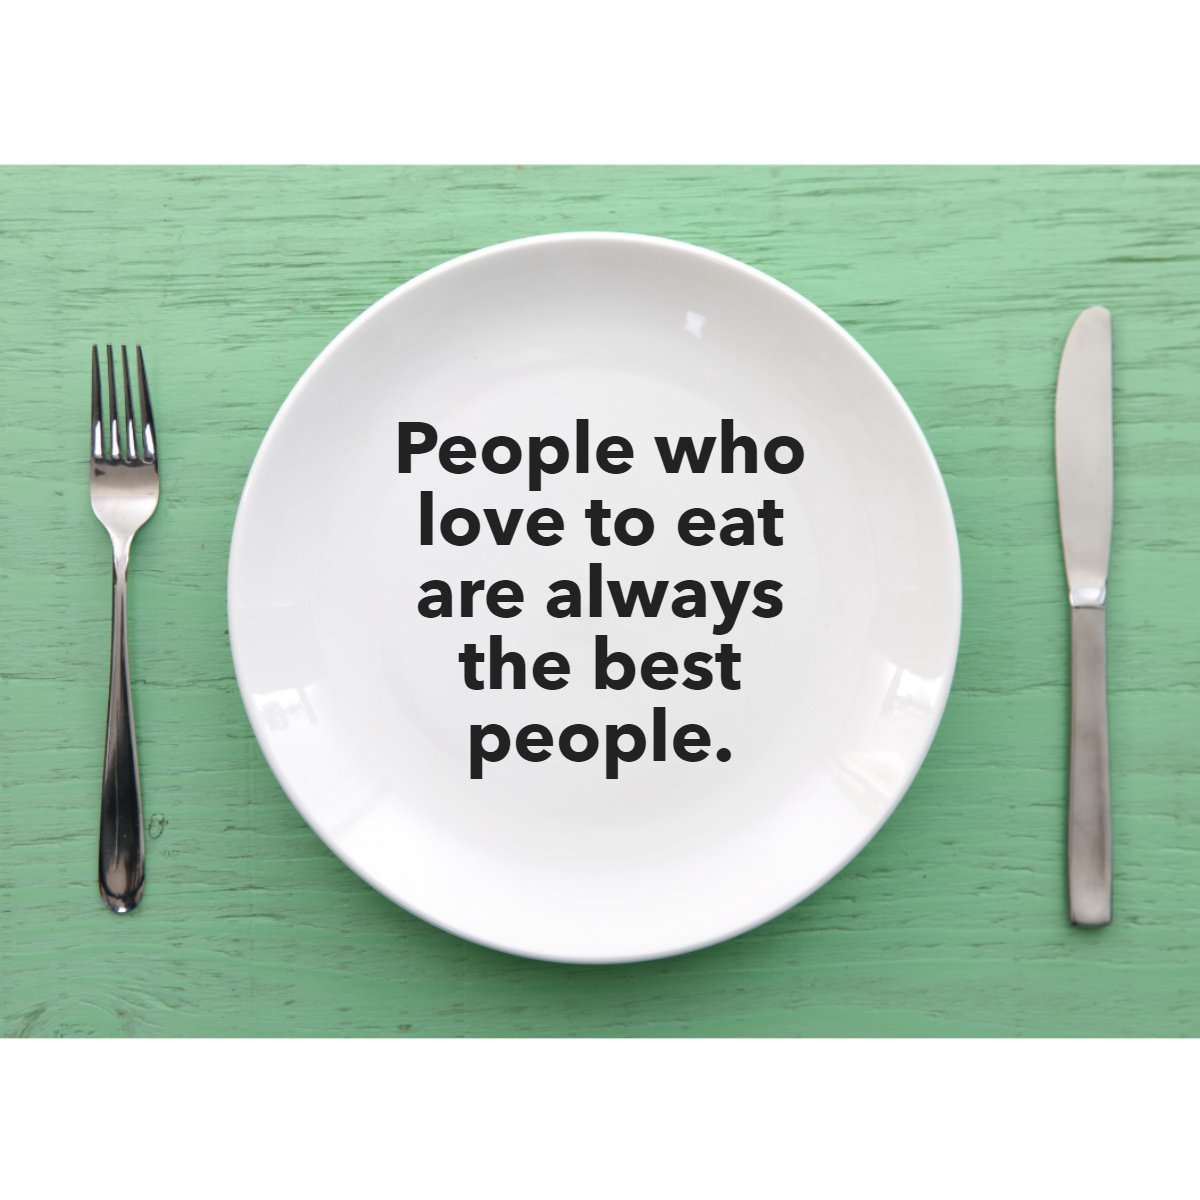 'People who love to eat are always the best people.'  
— Julia Child 😊

#goodfood   #goodpeople   #goodmoodfood   #goodtimeswithgoodpeople   #foodisgood   #goodtimeswithgreatpeople   #goodfoodgoodlife
#Realestate #fairlawn #paramus #saddlebrook #njrealestate